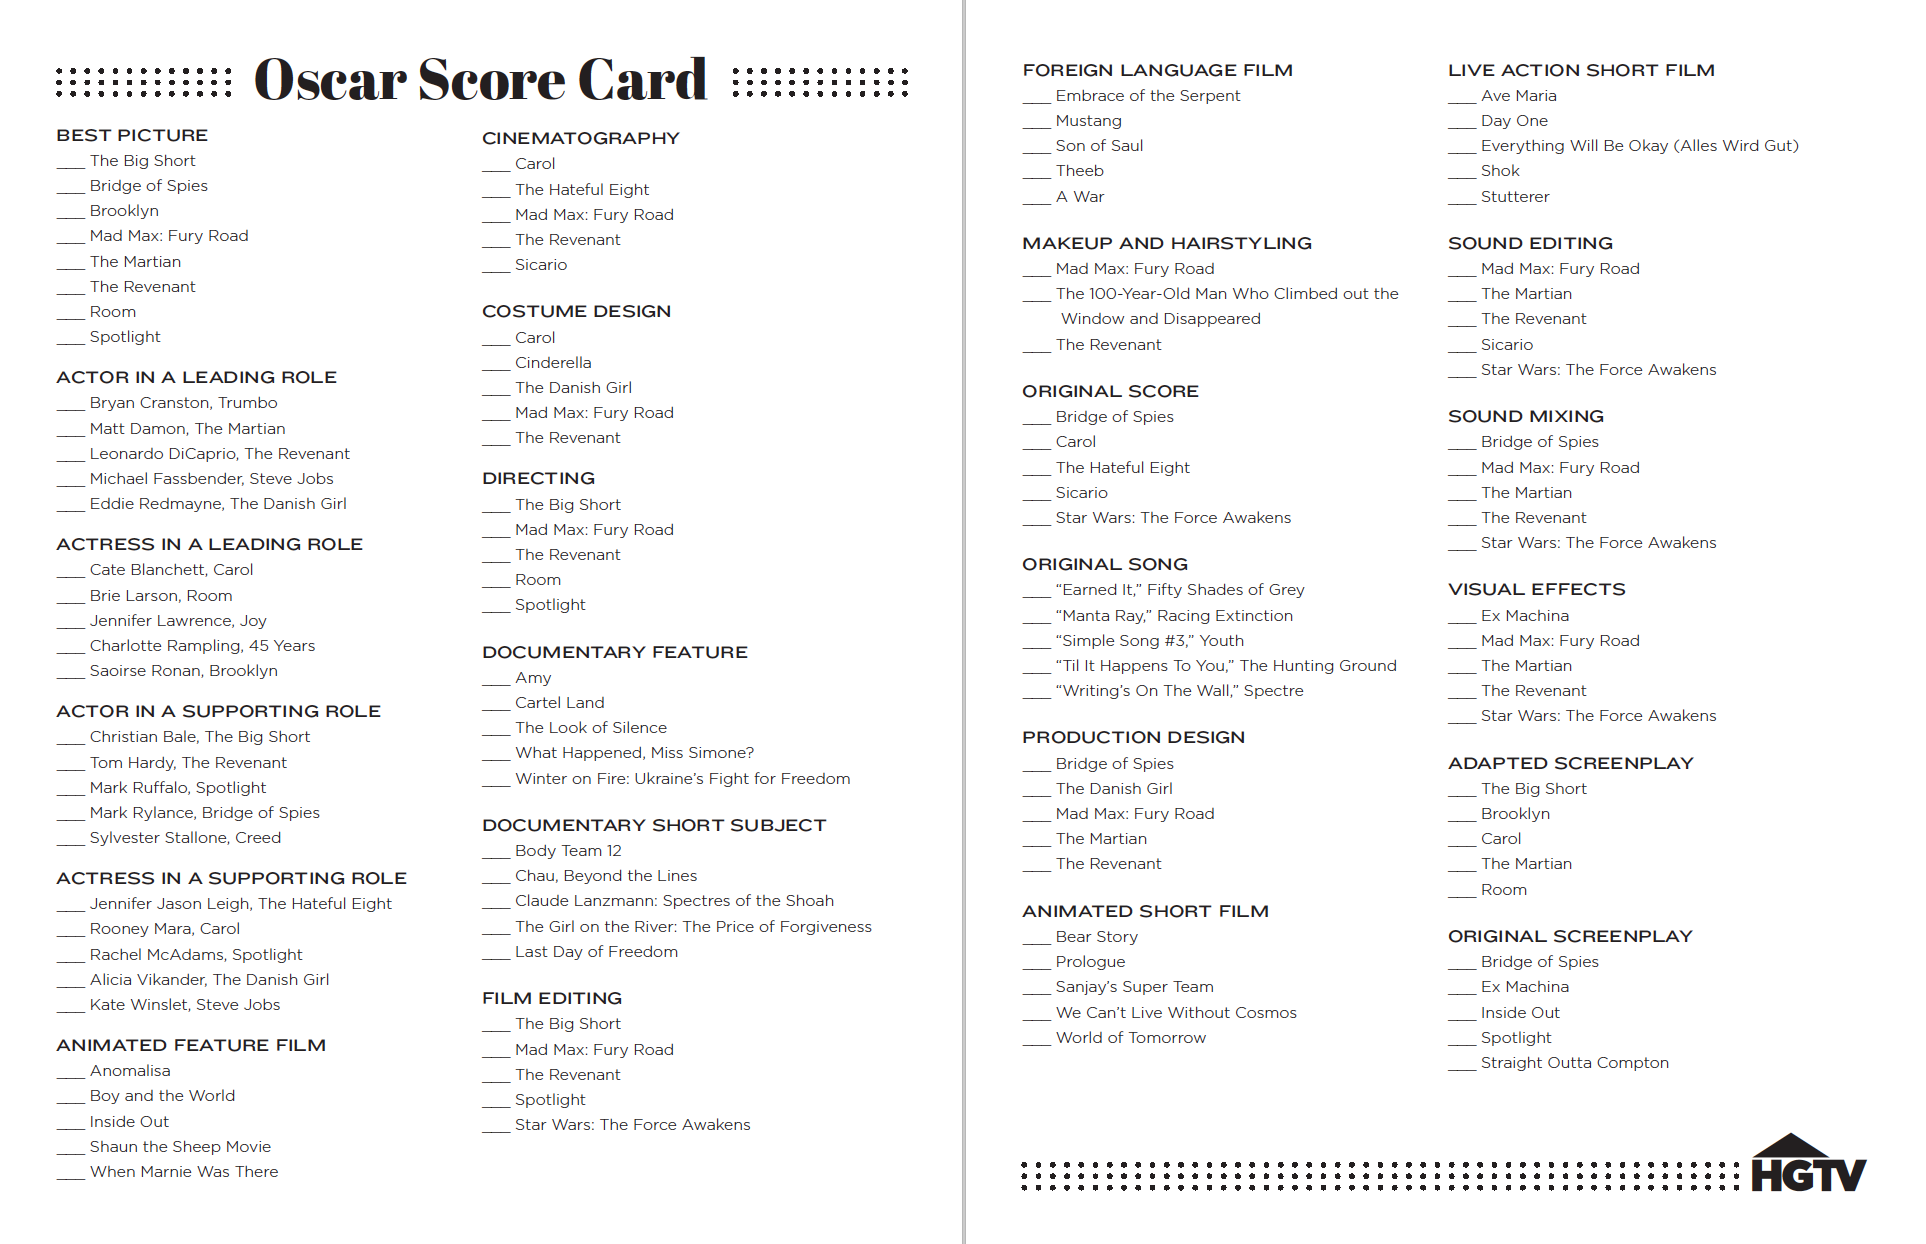 Printable Oscar Bingo and Scorecards | HGTV's Decorating & Design Blog | HGTV1926 x 1244